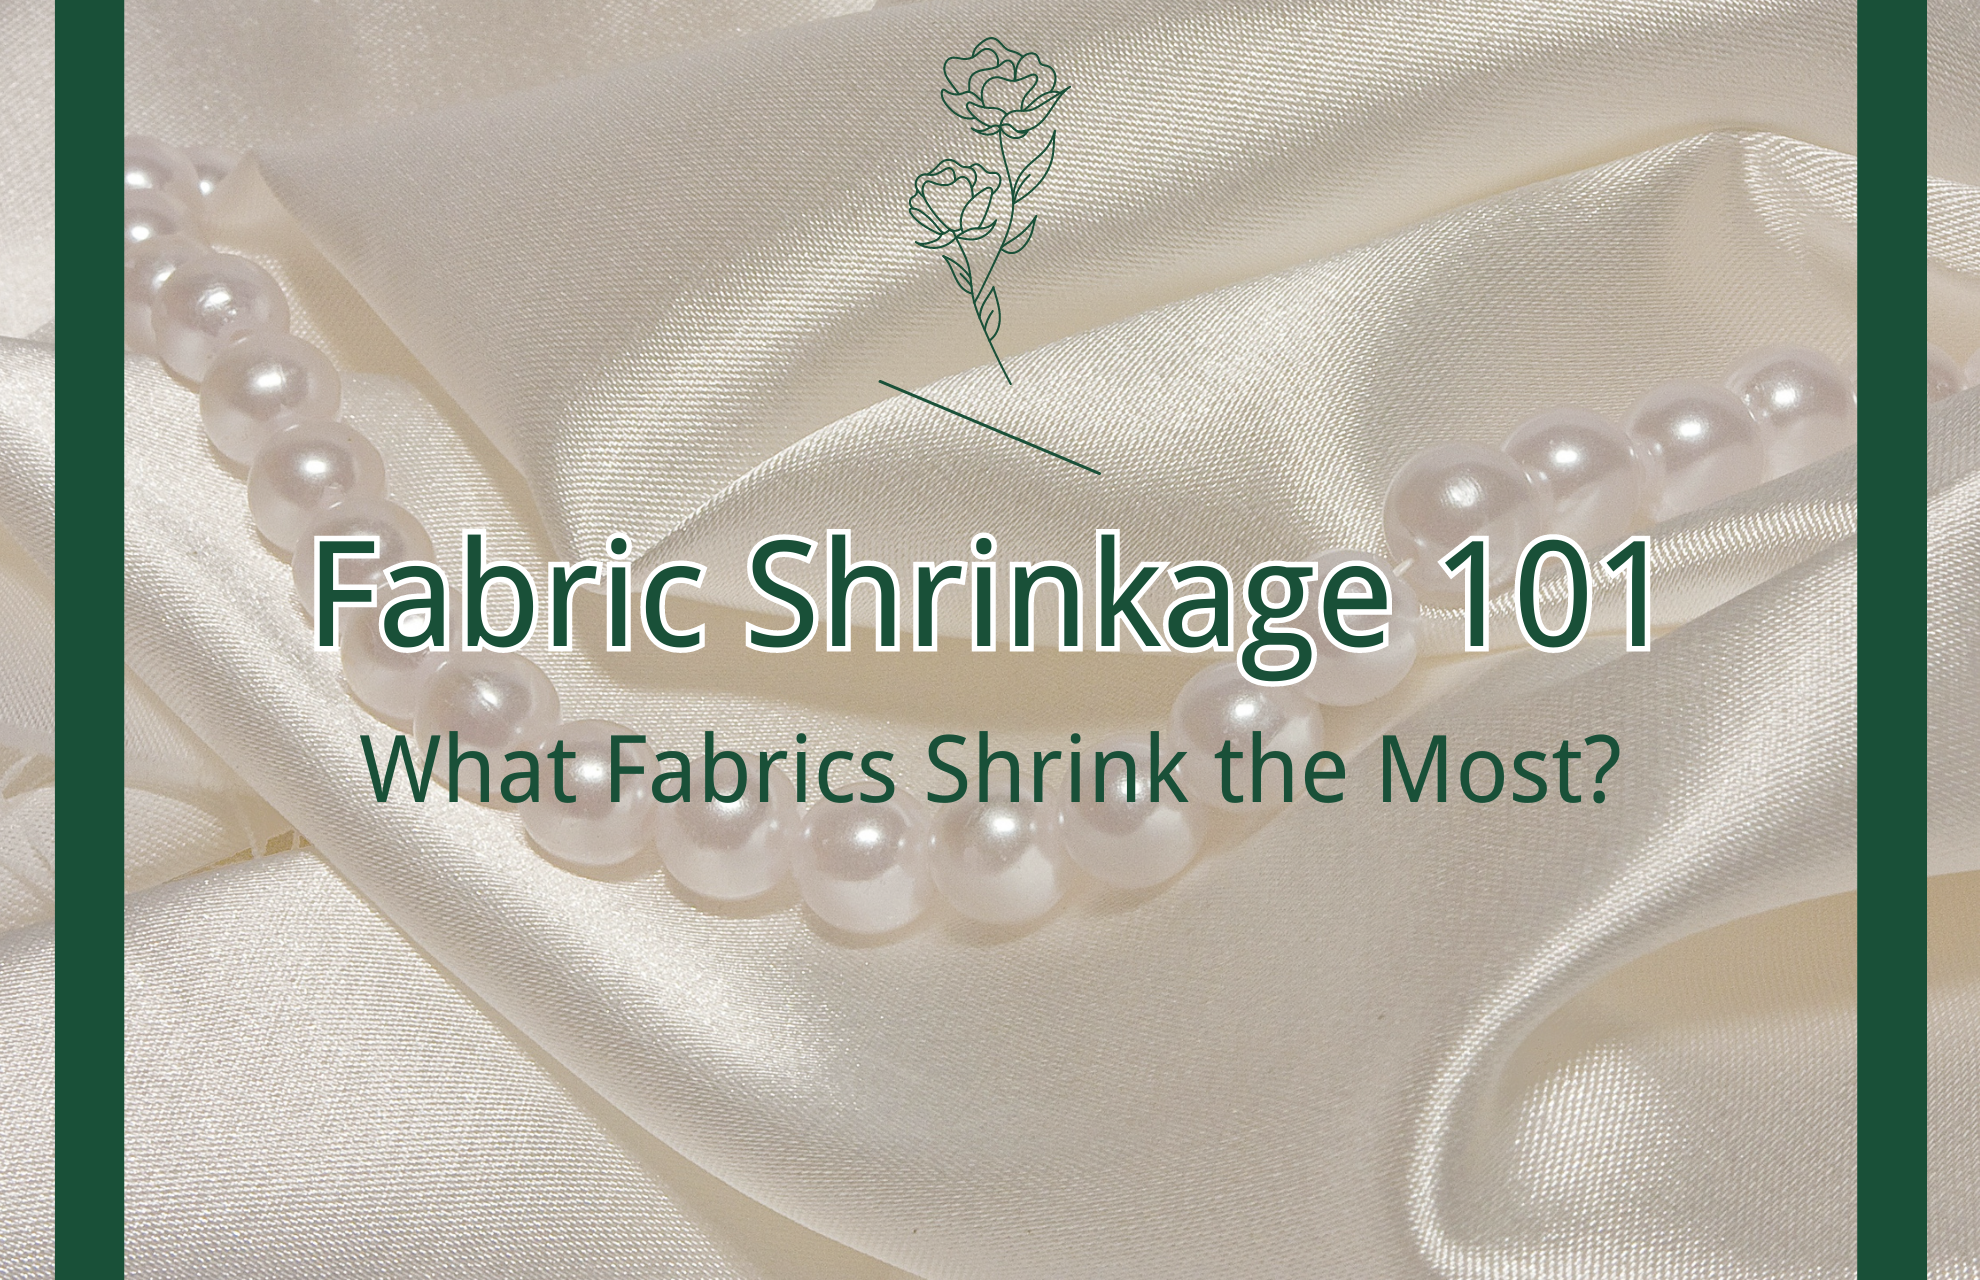 Fabric Shrinkage 101: What Fabrics Shrink the Most?